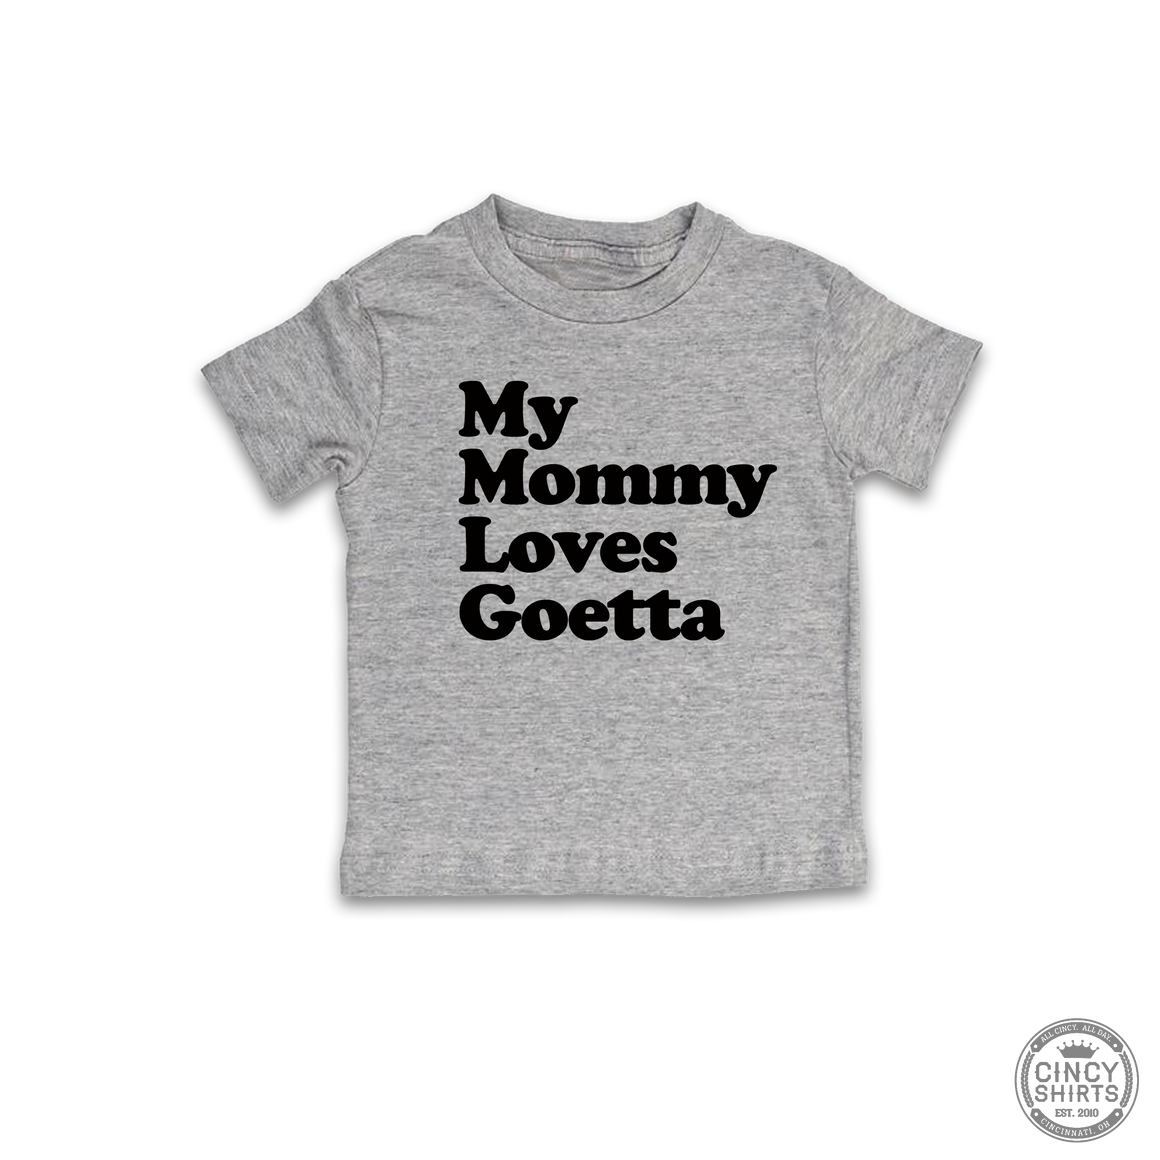 My Mommy Loves Goetta - Youth Sizes - Cincy Shirts